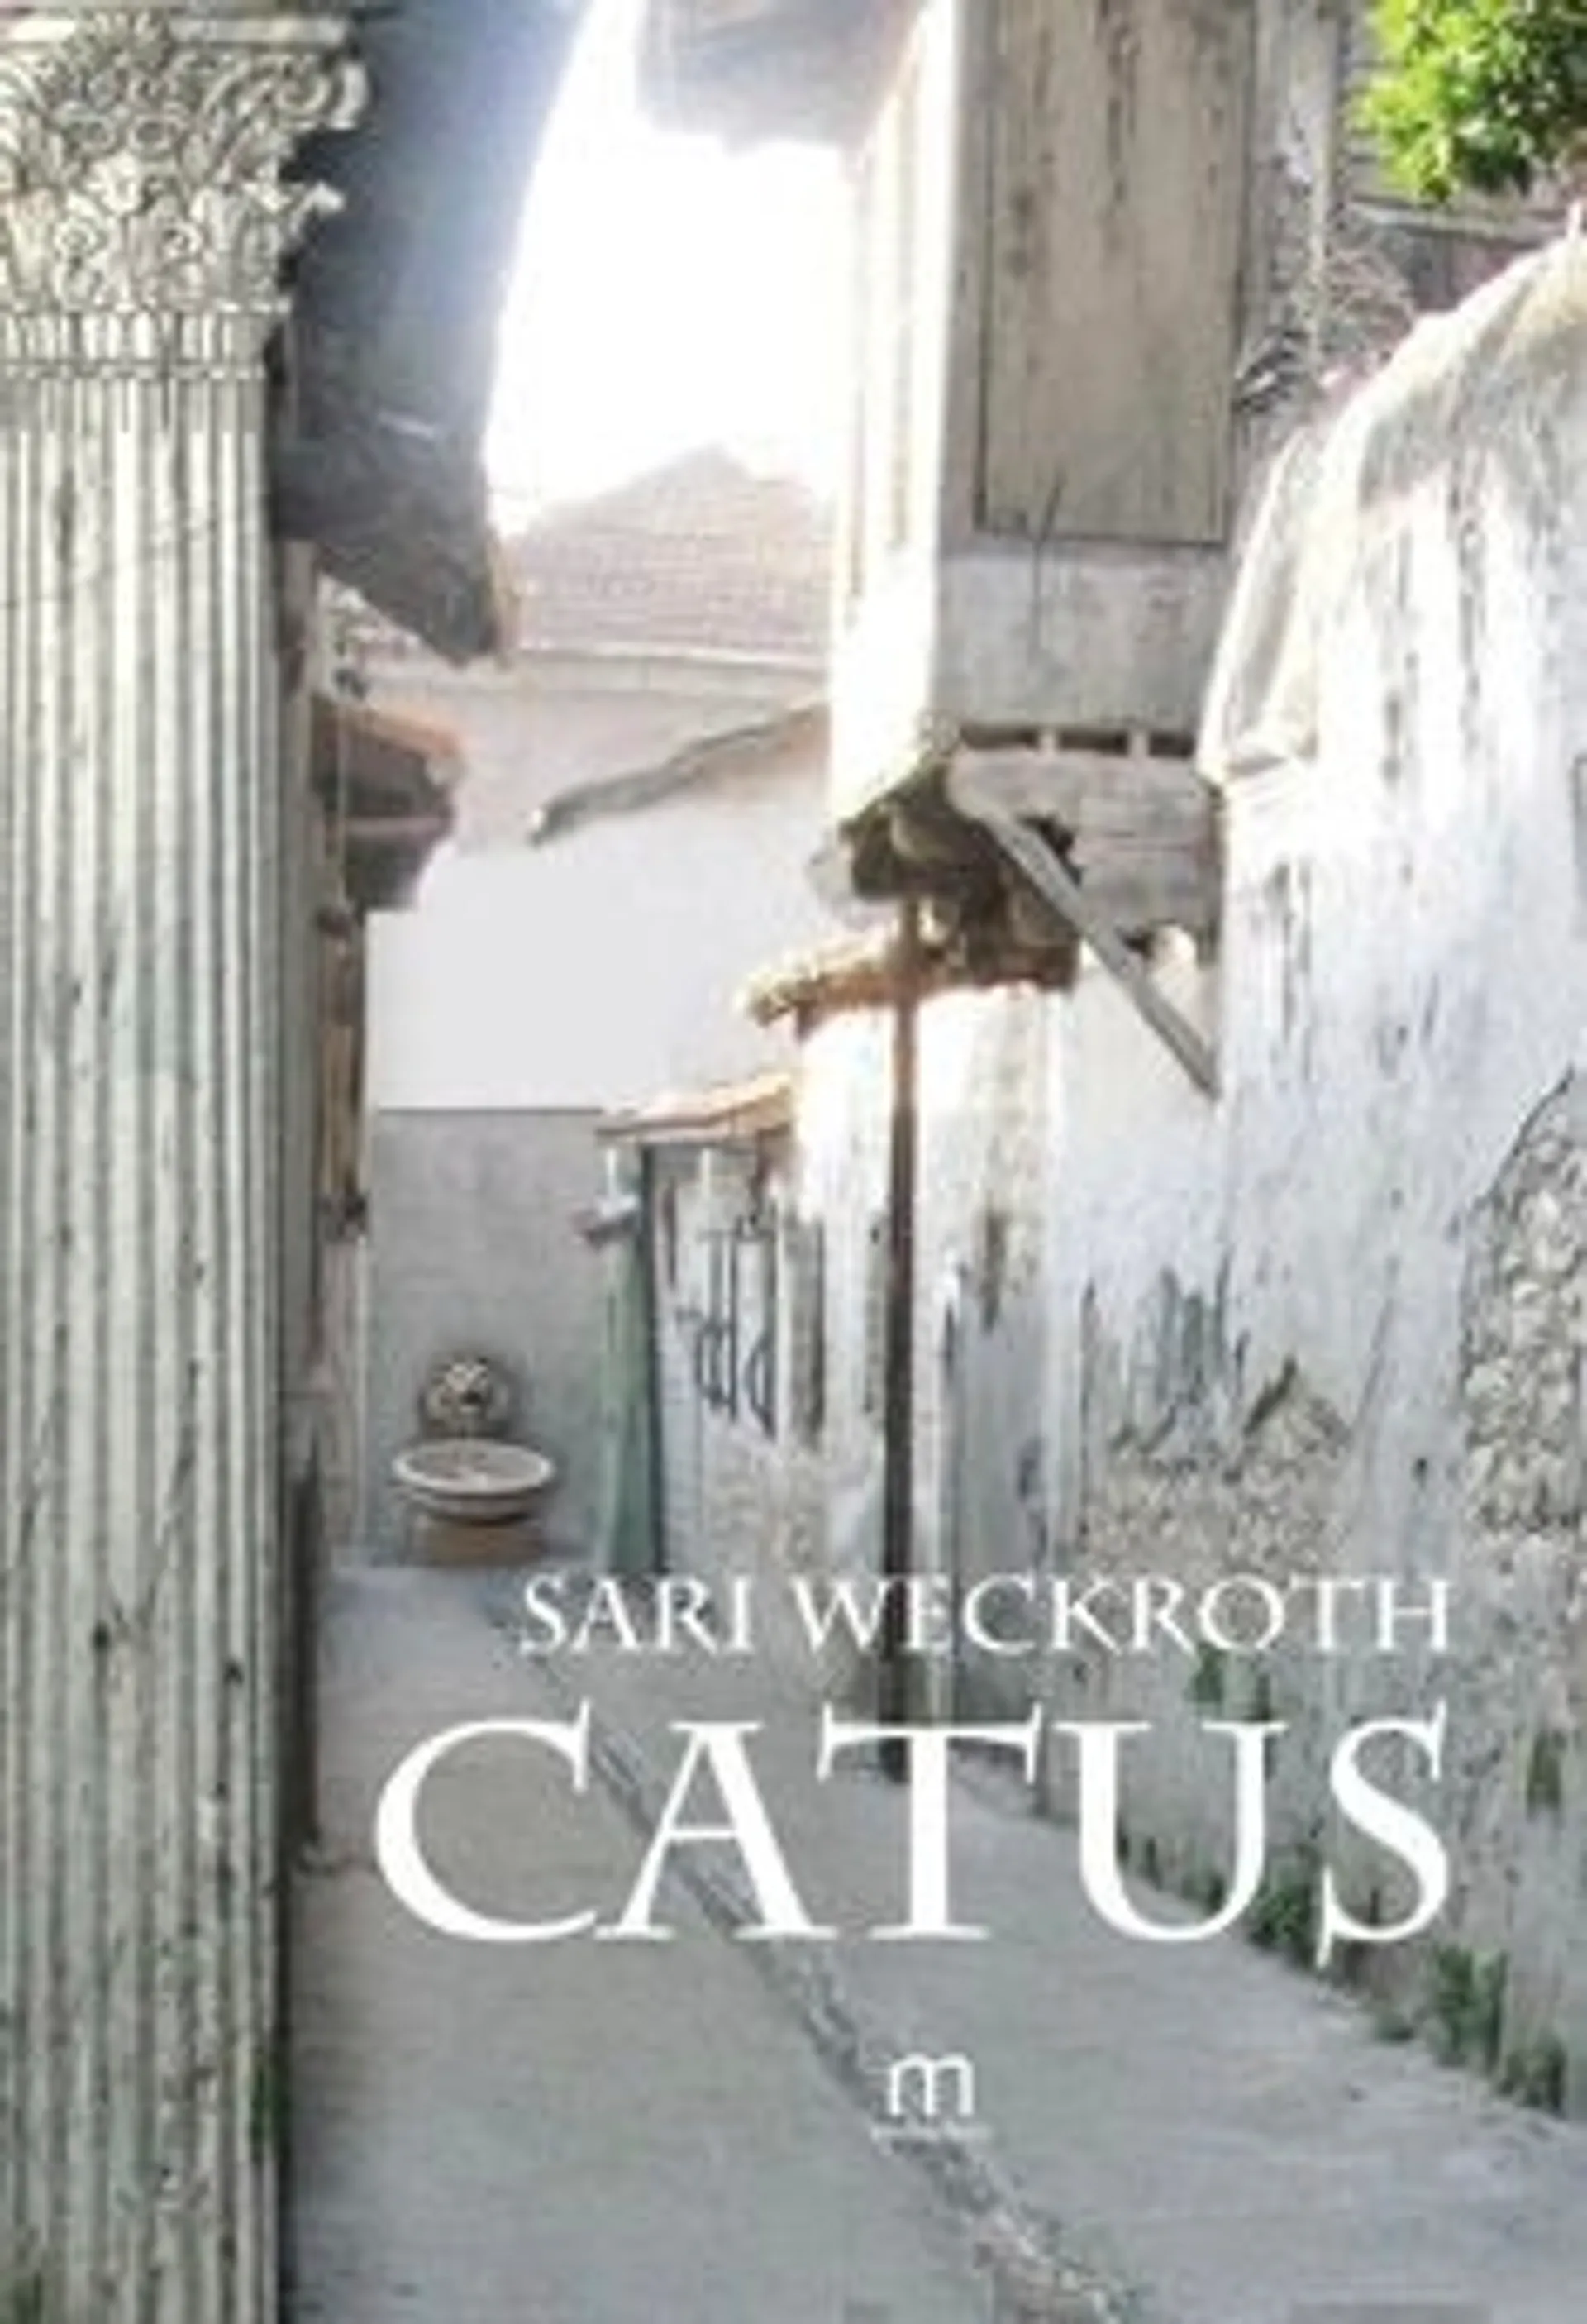 Weckroth, Catus